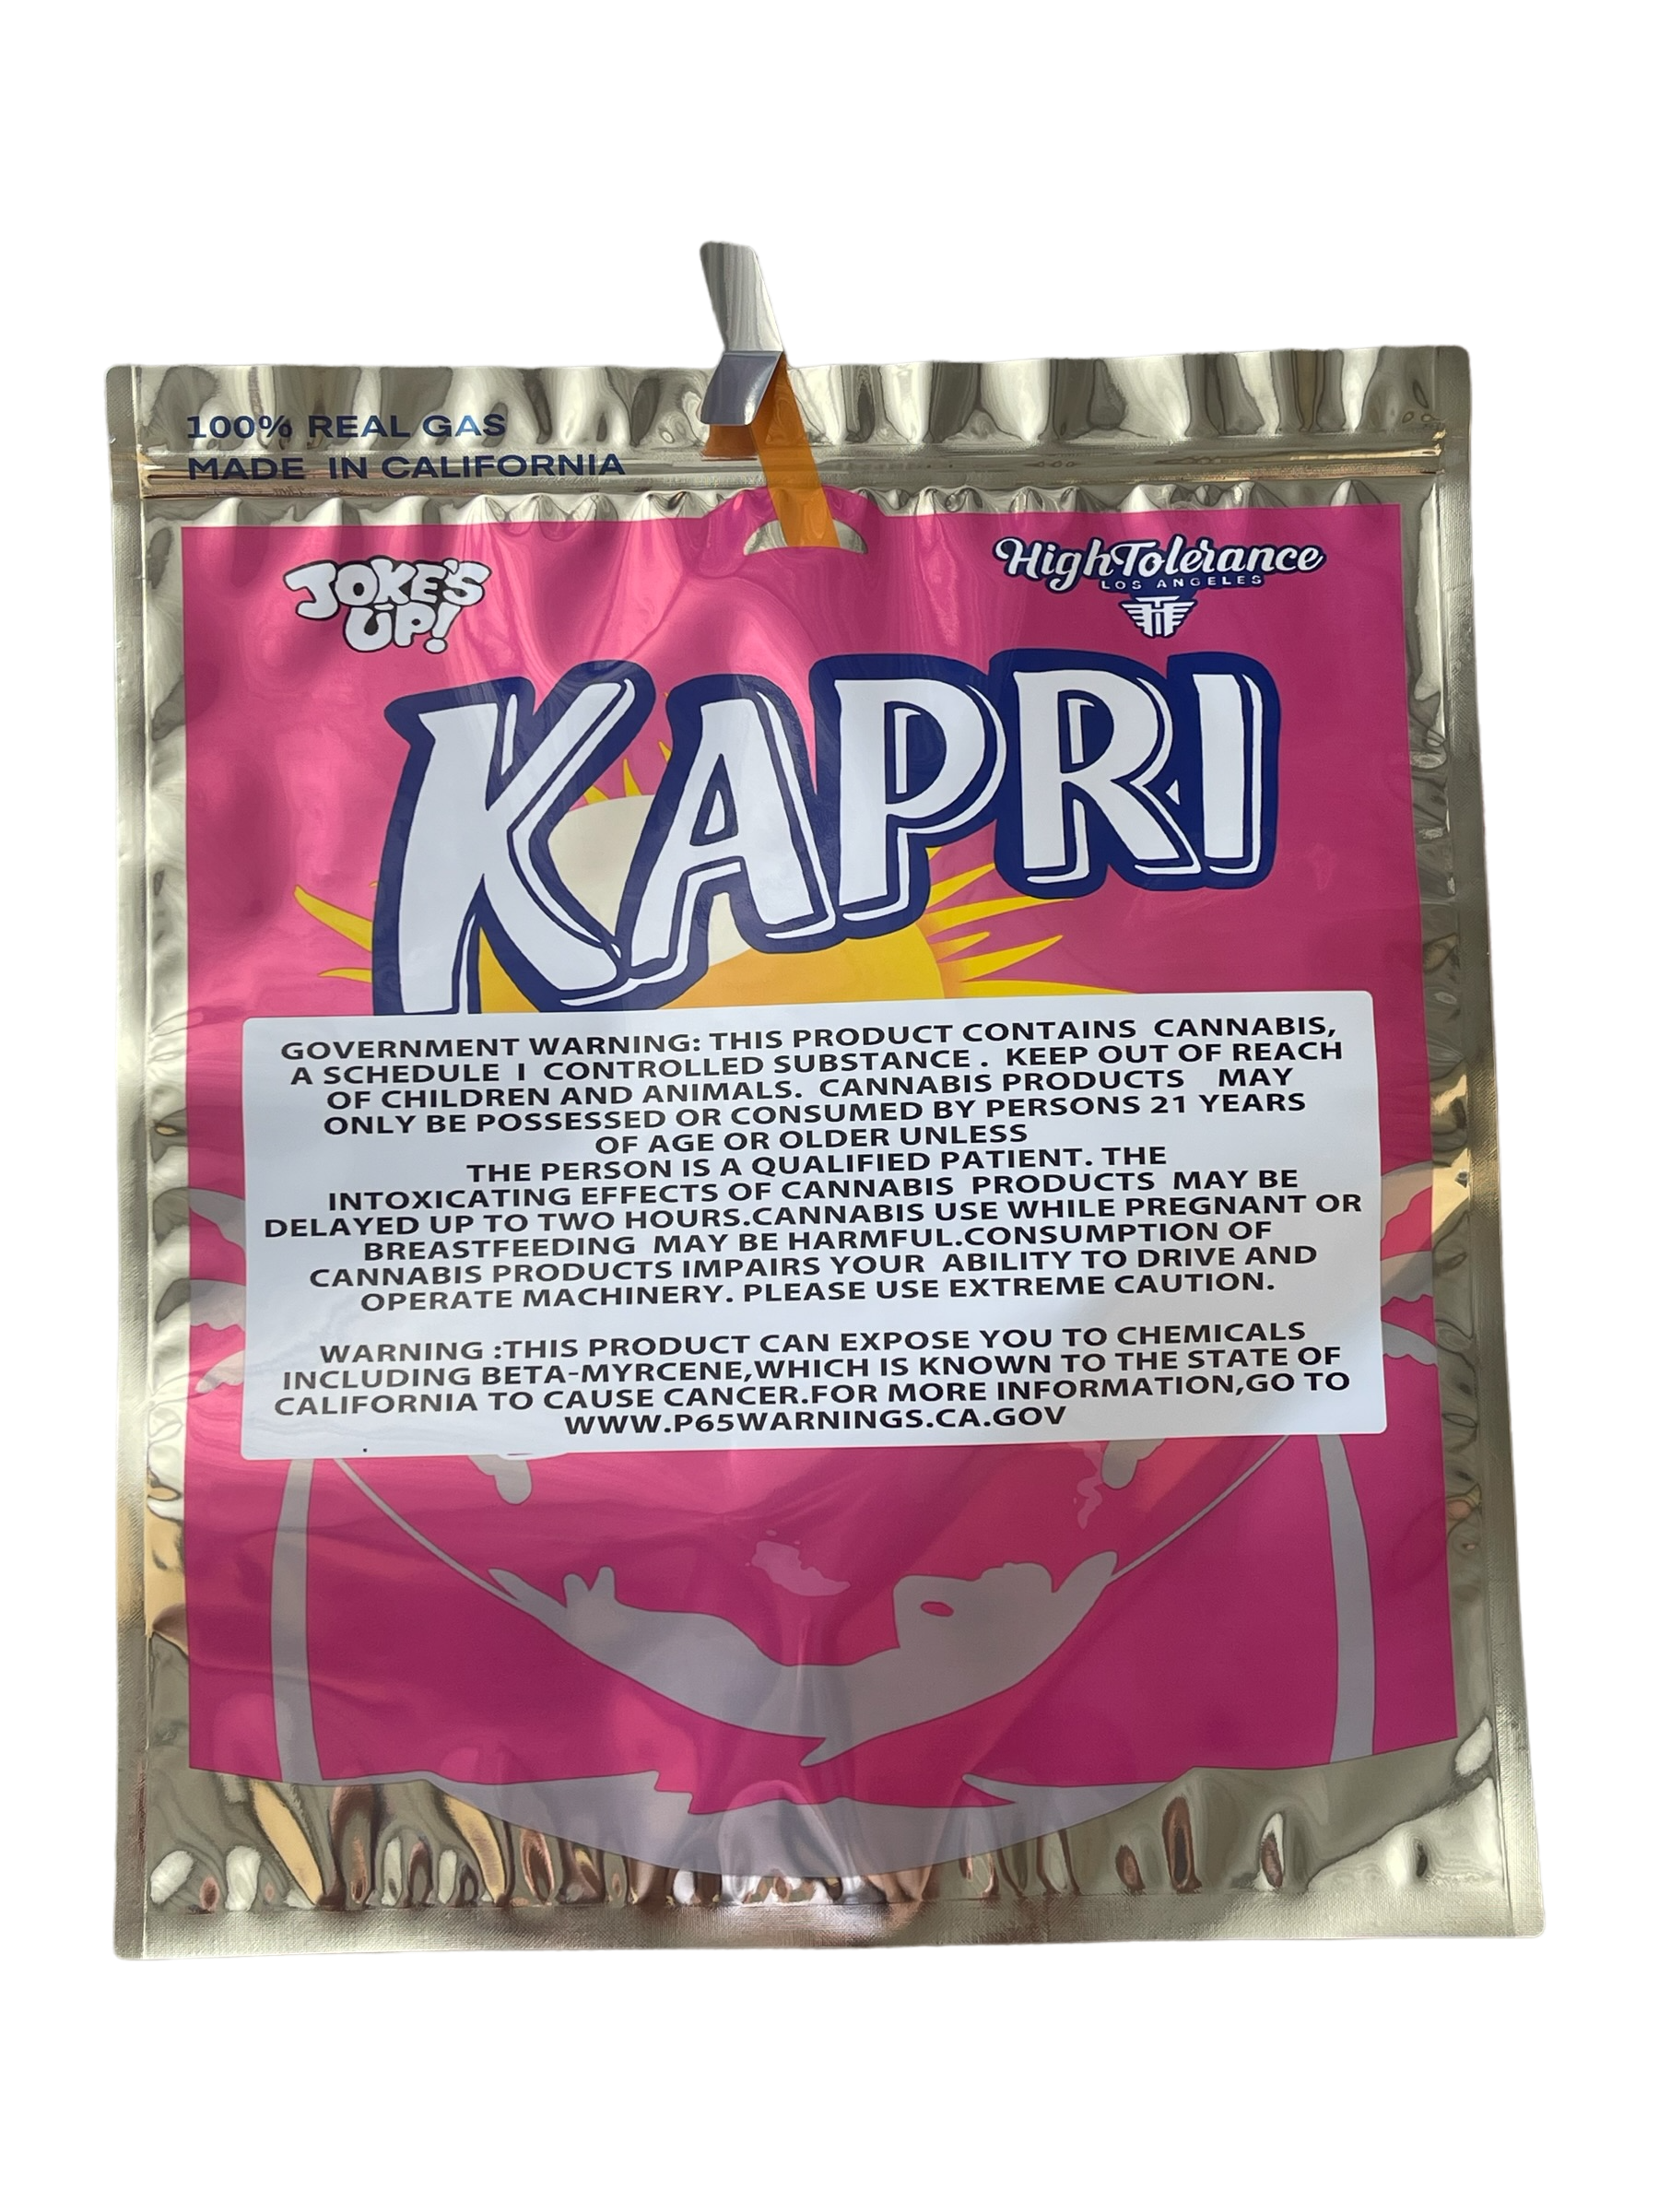 Kapri Pink Lemonade Mylar Bag (Large) 1 LBS - 16OZ (454g) High Tolerance- Jokes Up Pound Bag